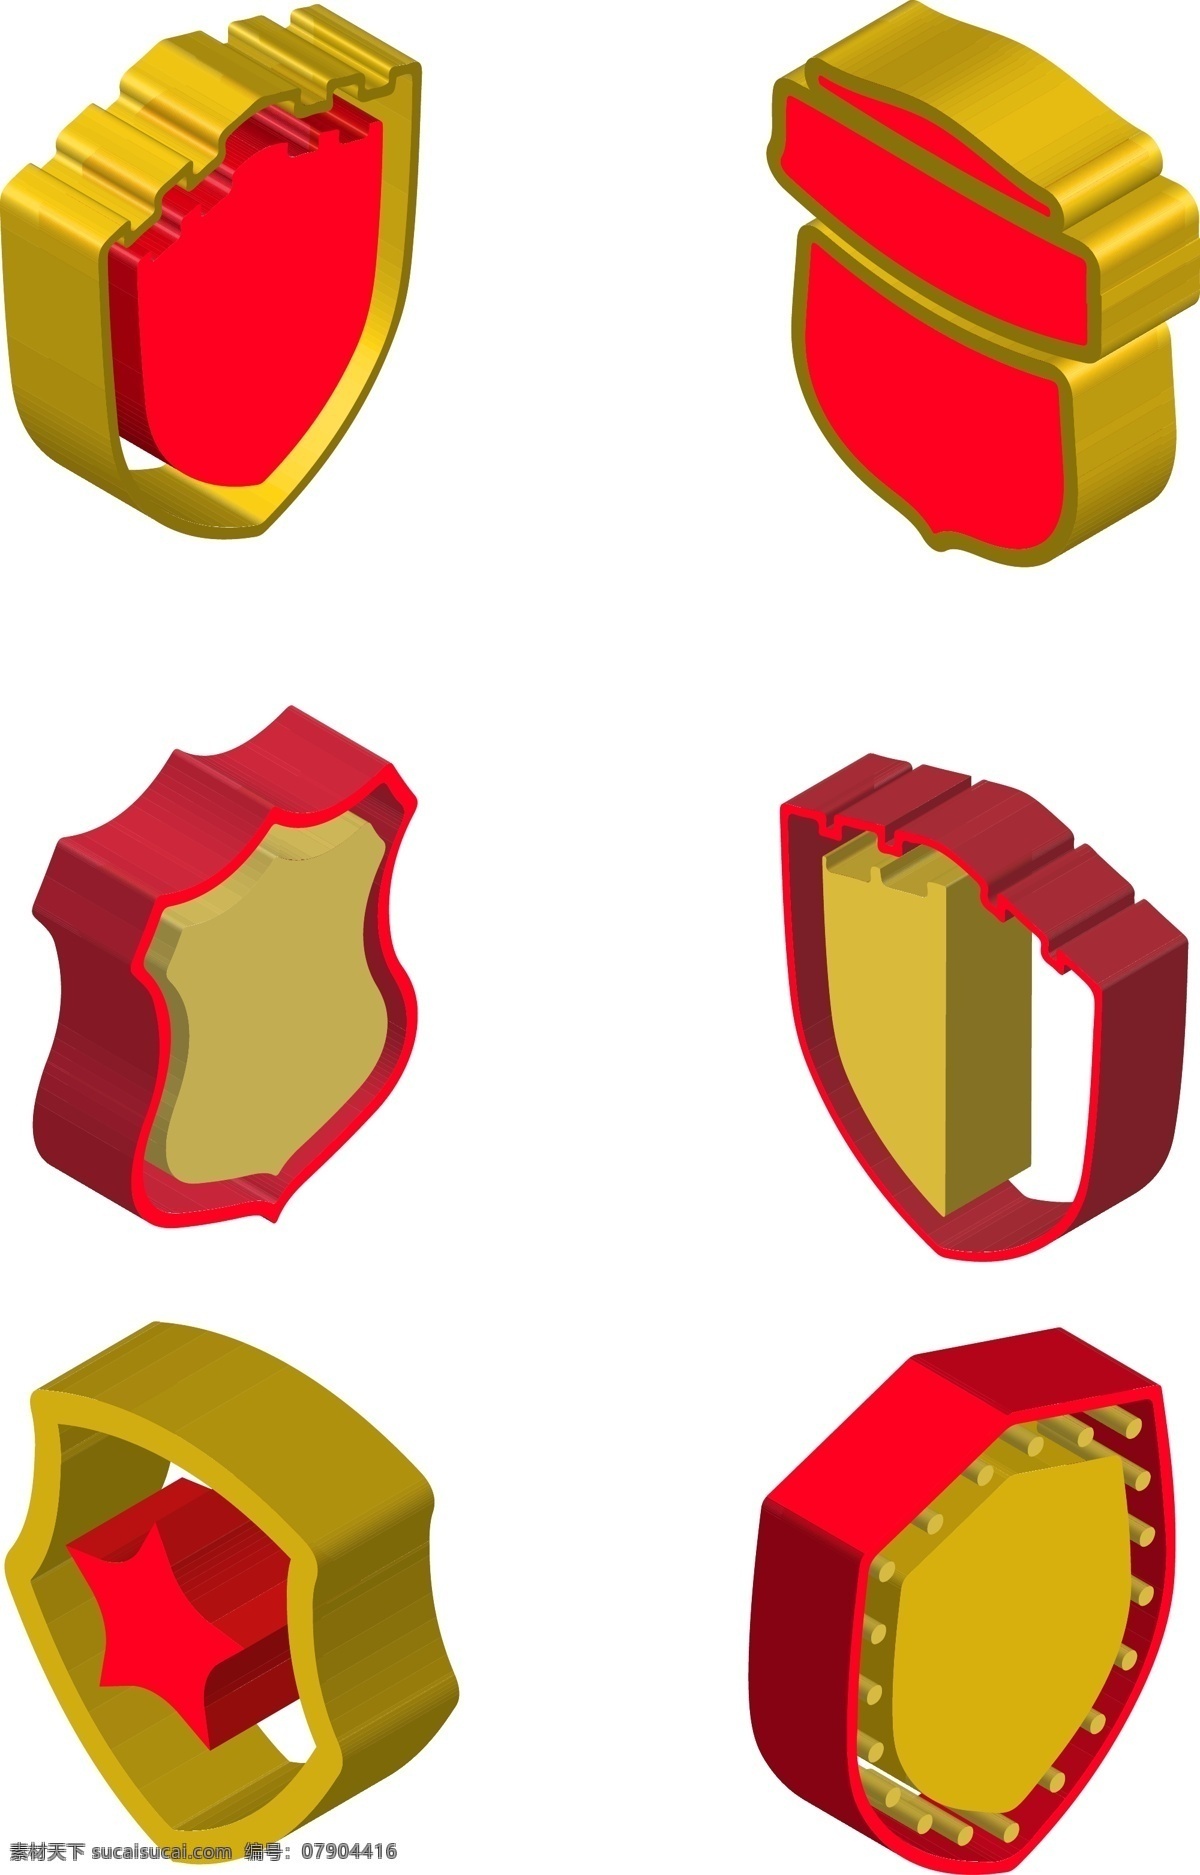 d 红 金盾牌 漂浮 元素 商用 2.5d 金 盾牌 ai素材 漂浮元素